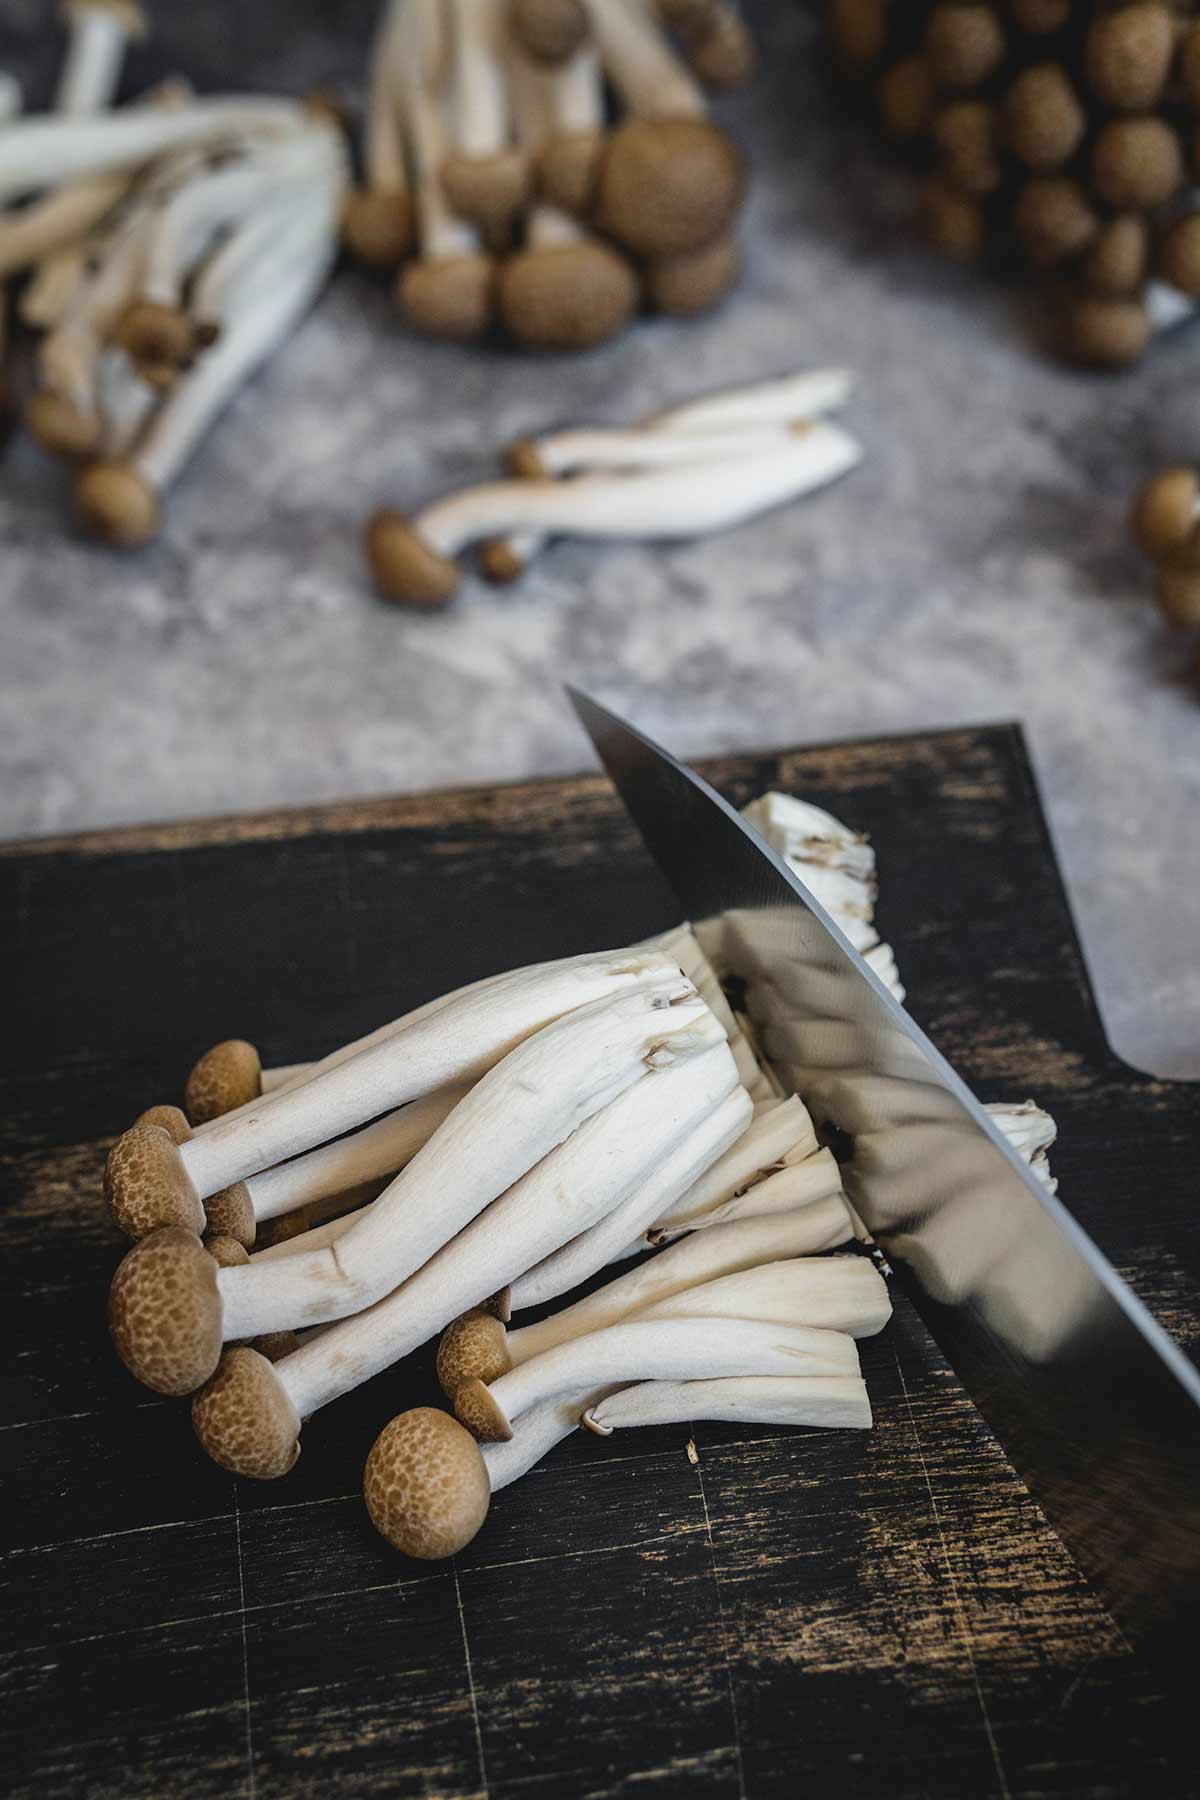 How to prepare shimeji mushrooms